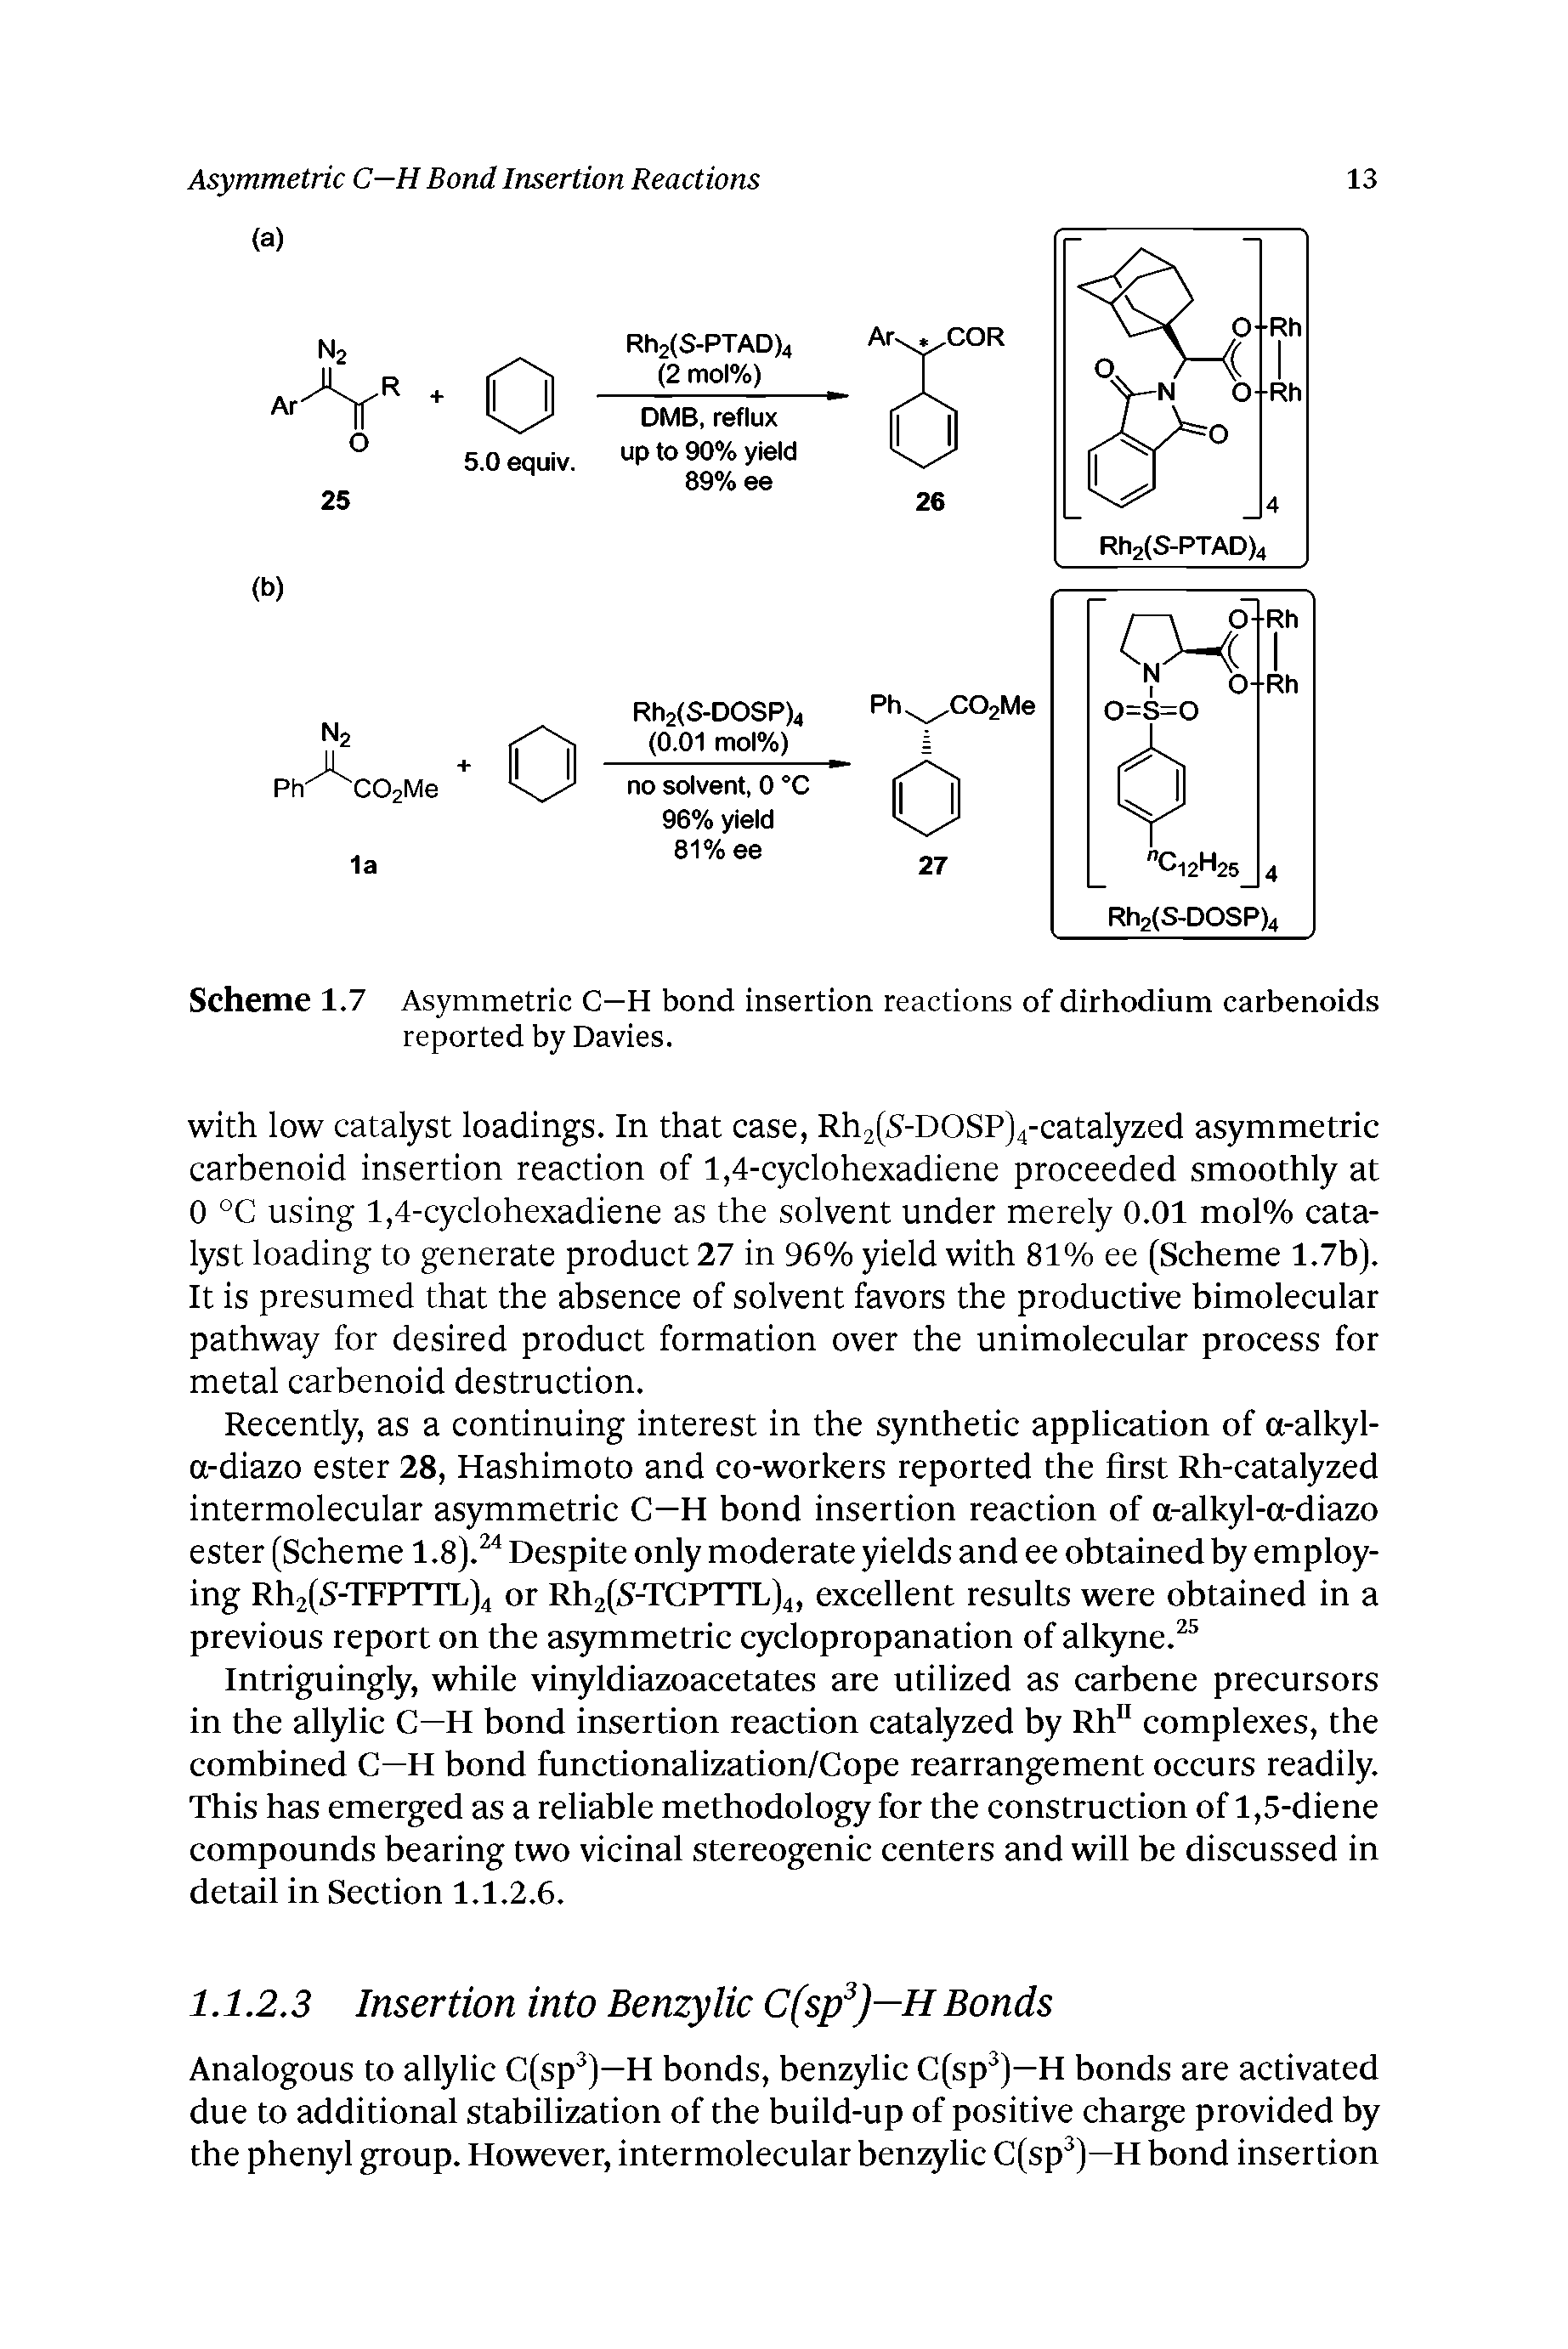 Scheme 1.7 Asymmetric C—H bond insertion reactions of dirhodium carbenoids reported by Davies.